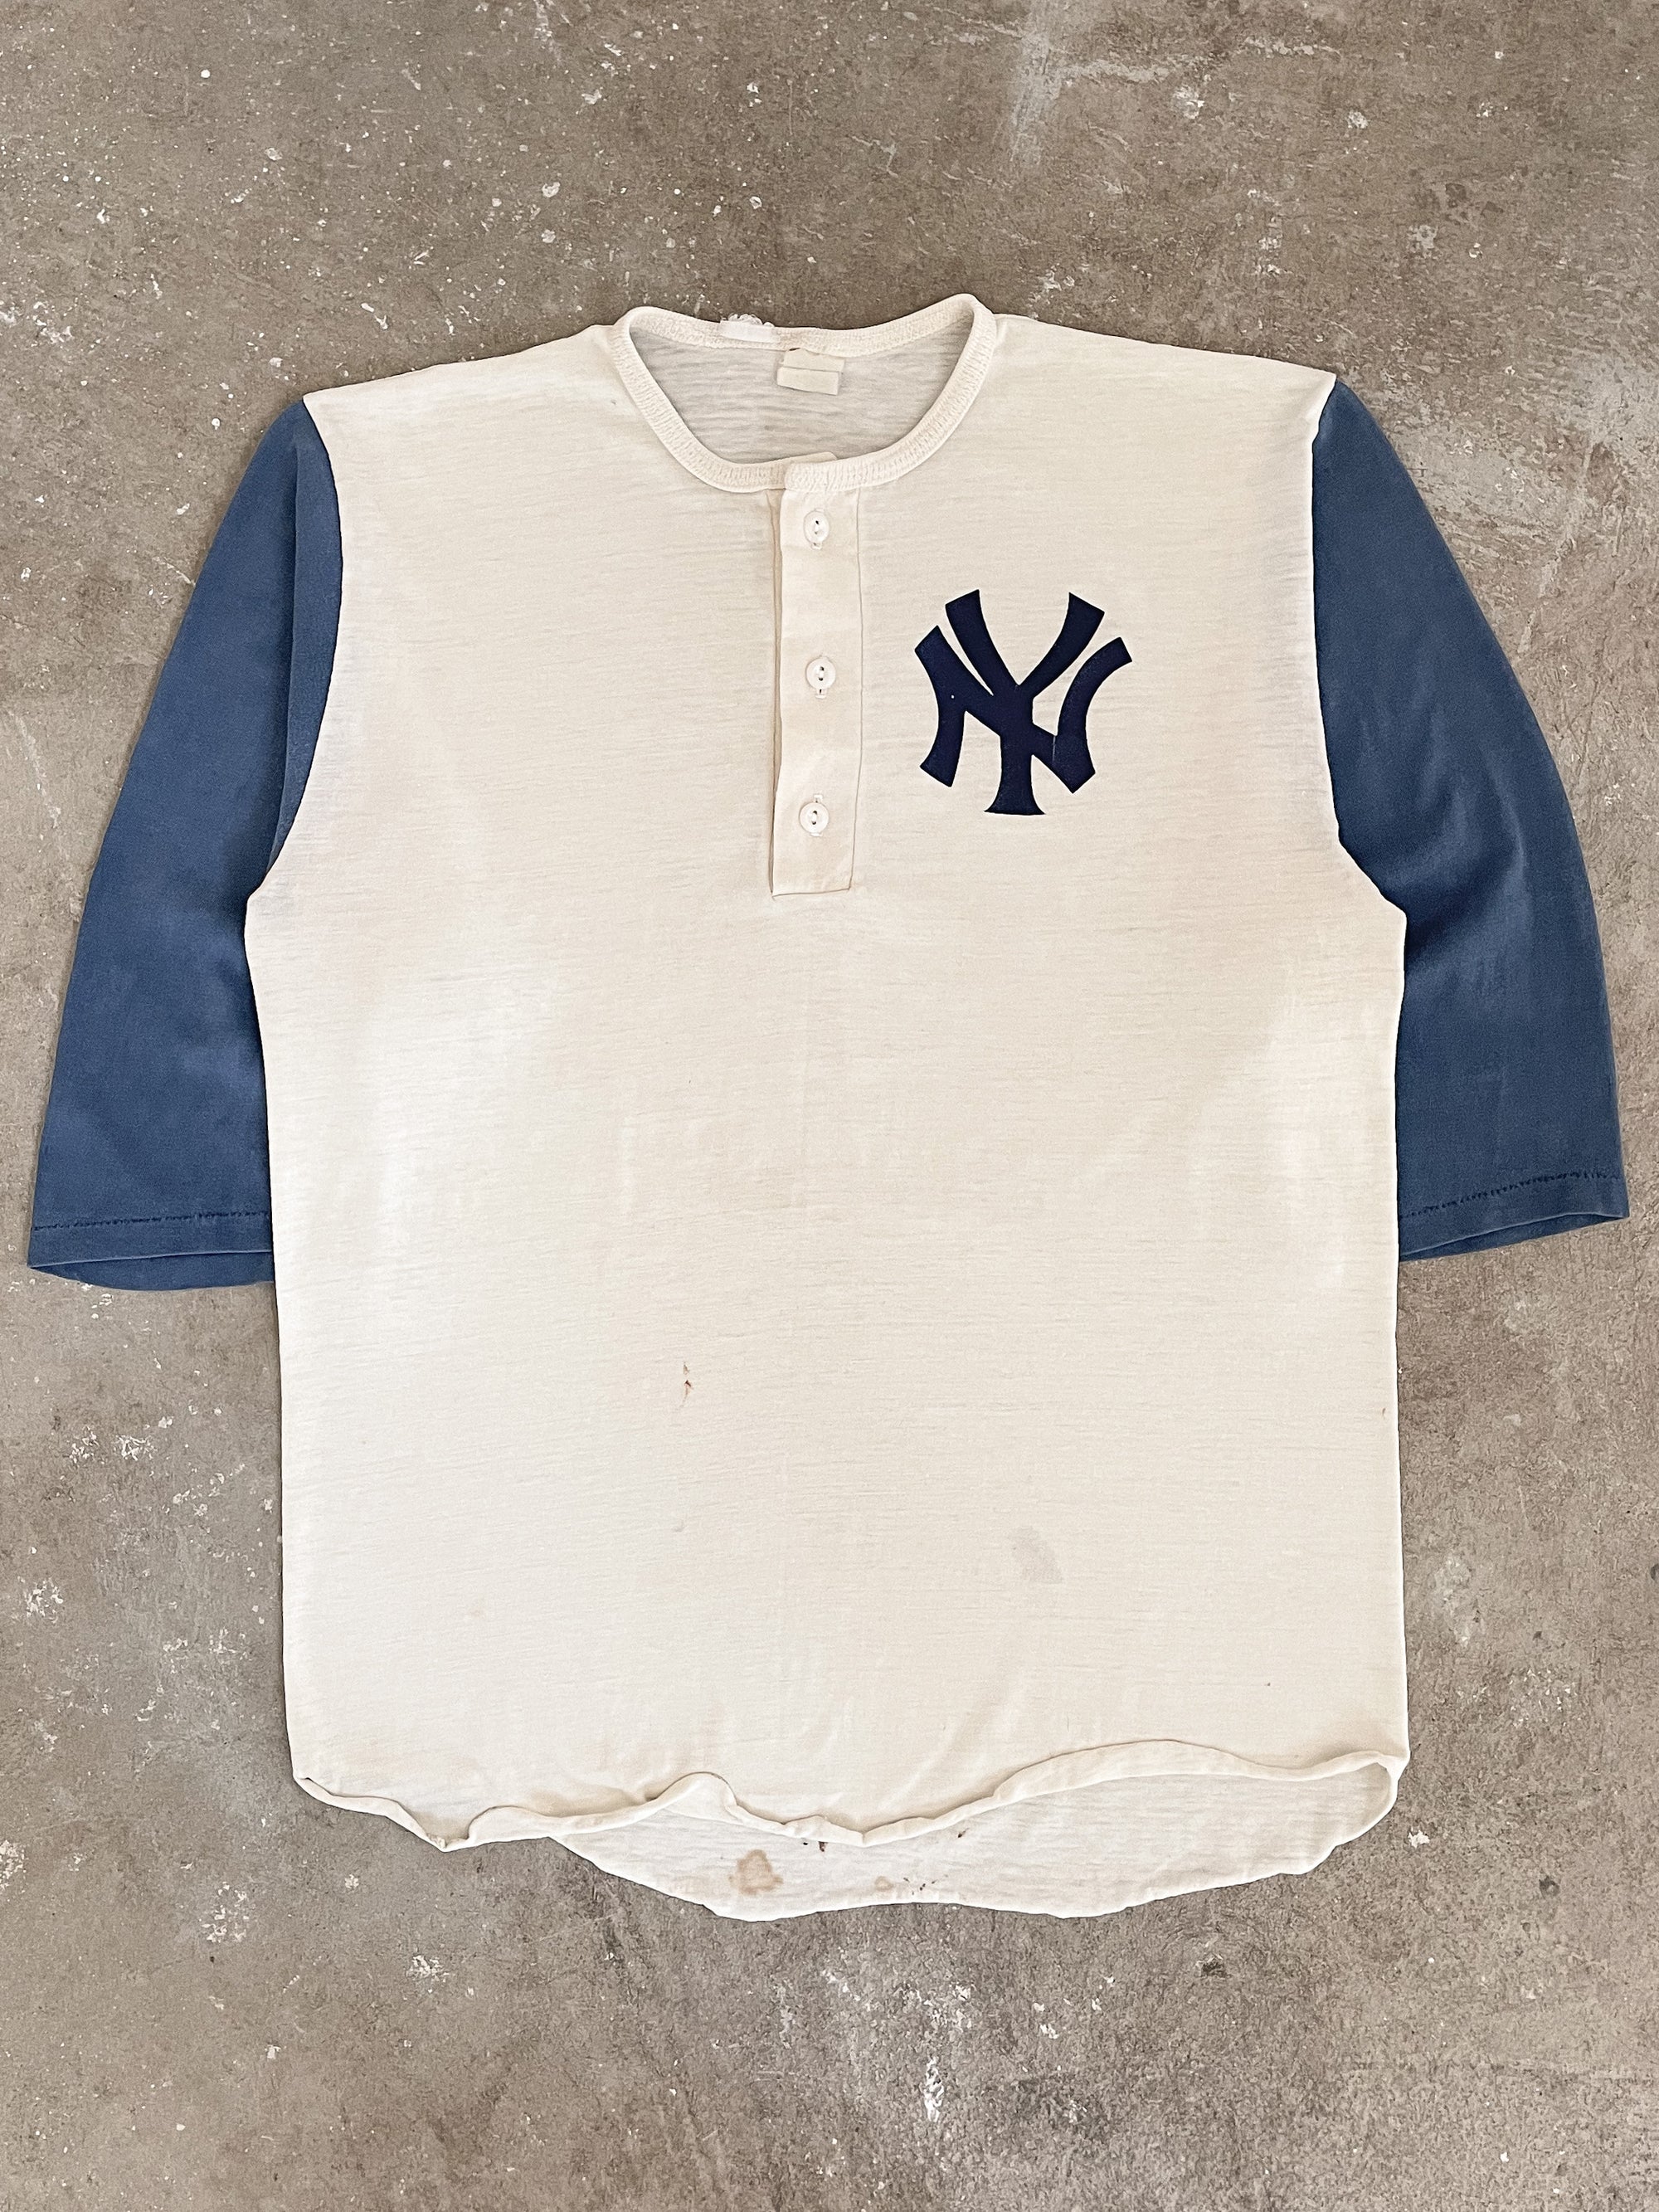 1980s “NY Yankees” Single Stitched Henley Baseball Tee (M)